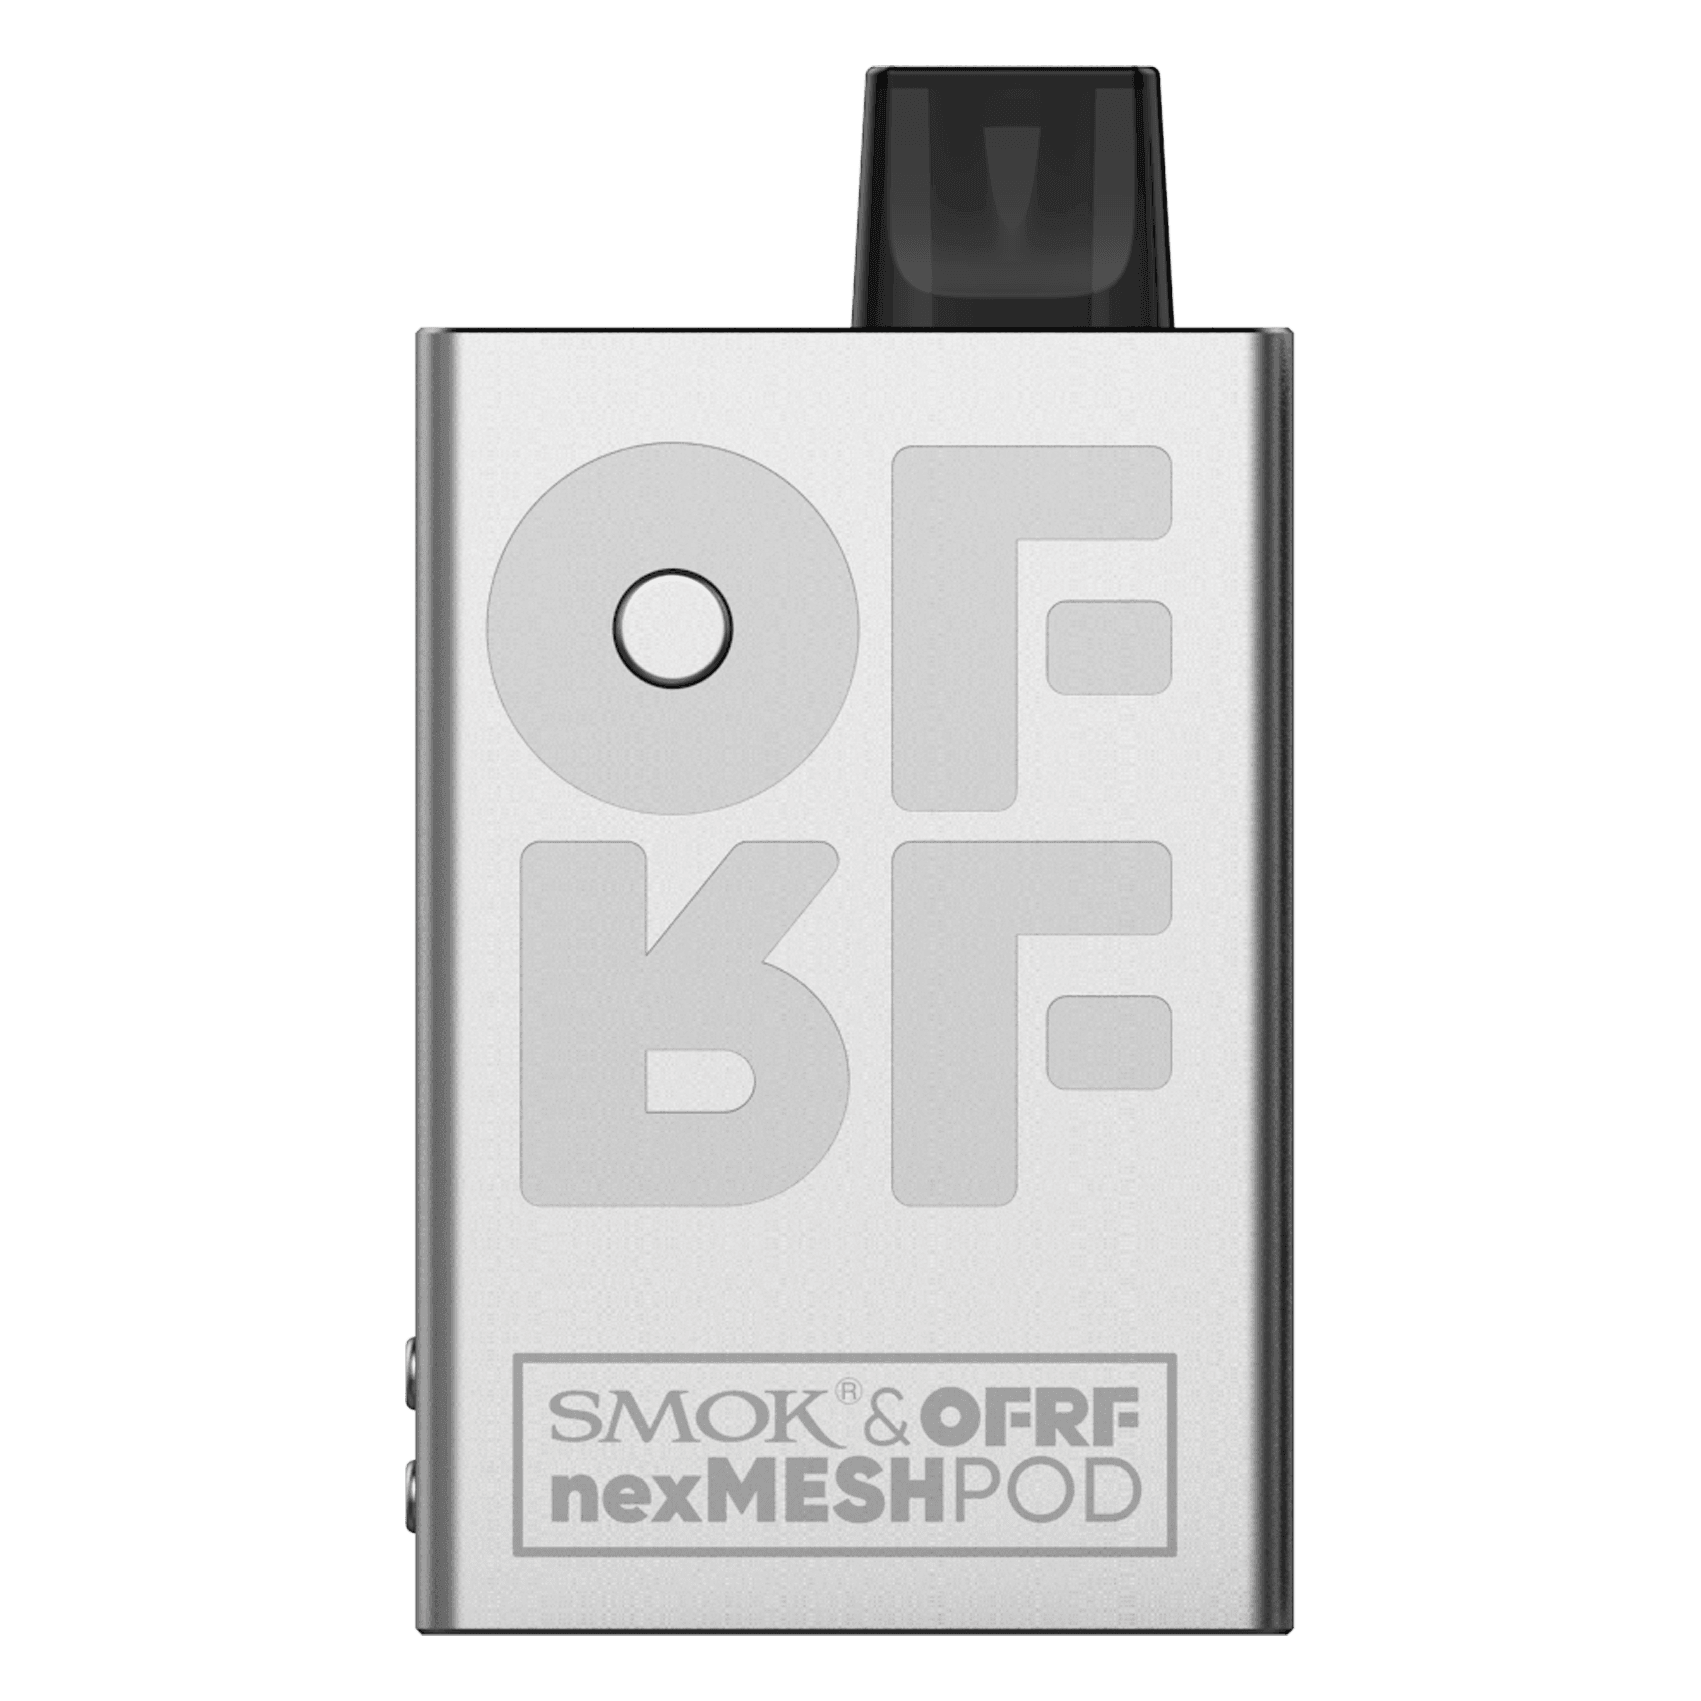 SMOK & OFRF NEXMESH POD SILVER - Vape Unit